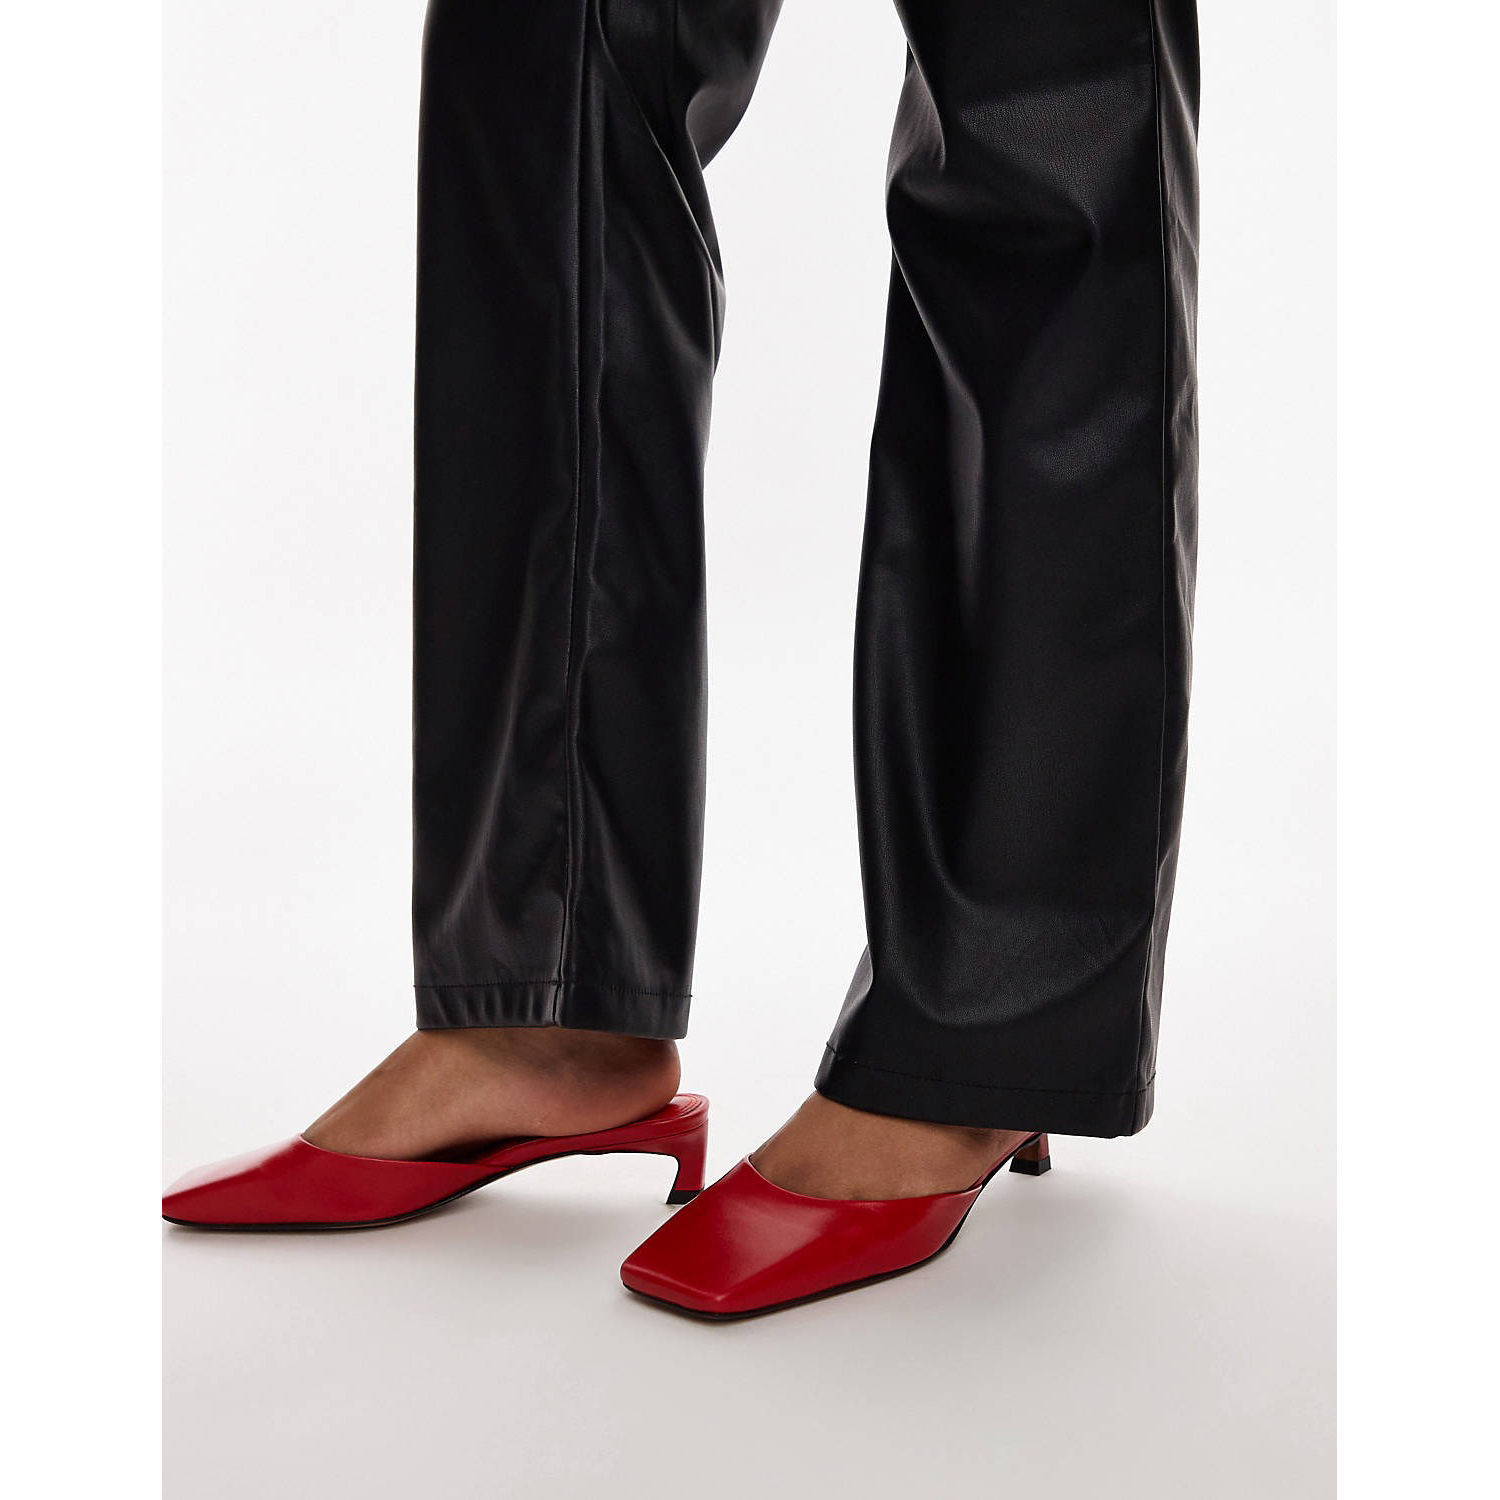 Мюли Topshop Audrey Premium Leather Mid Heeled Square Toe, красный цена и фото